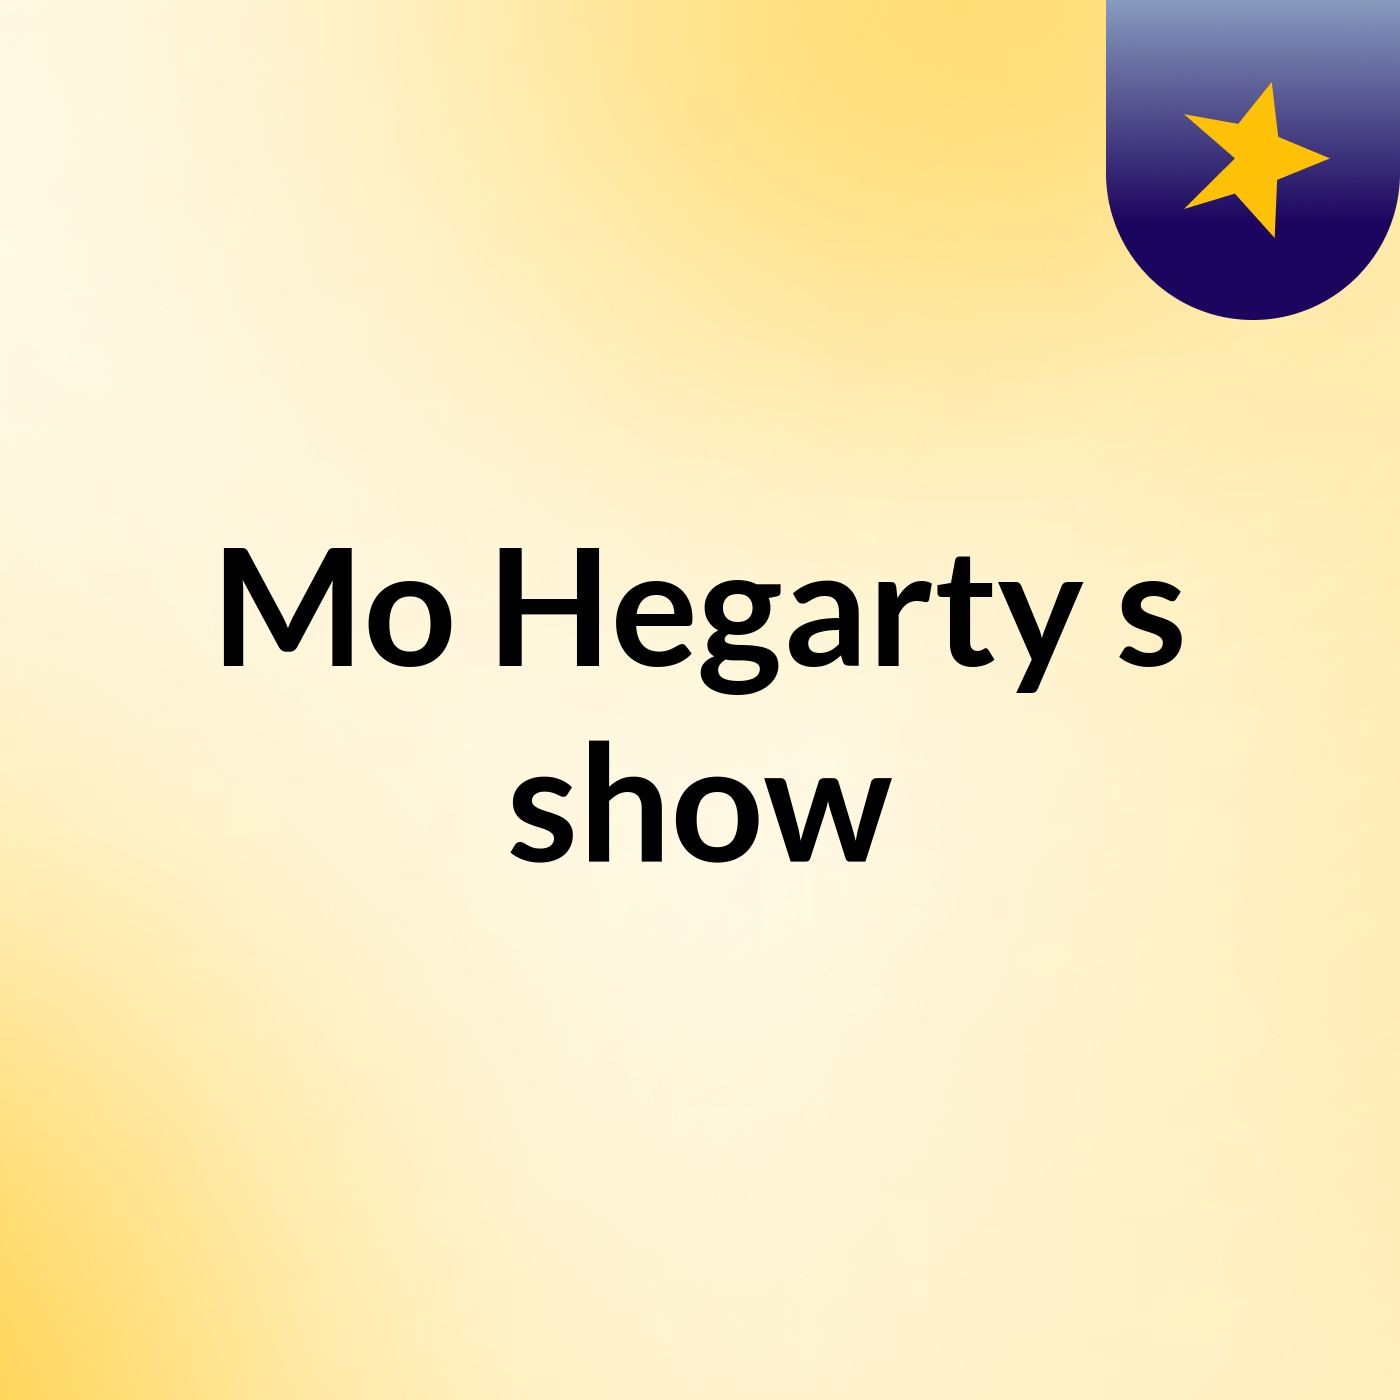 Mo Hegarty's show